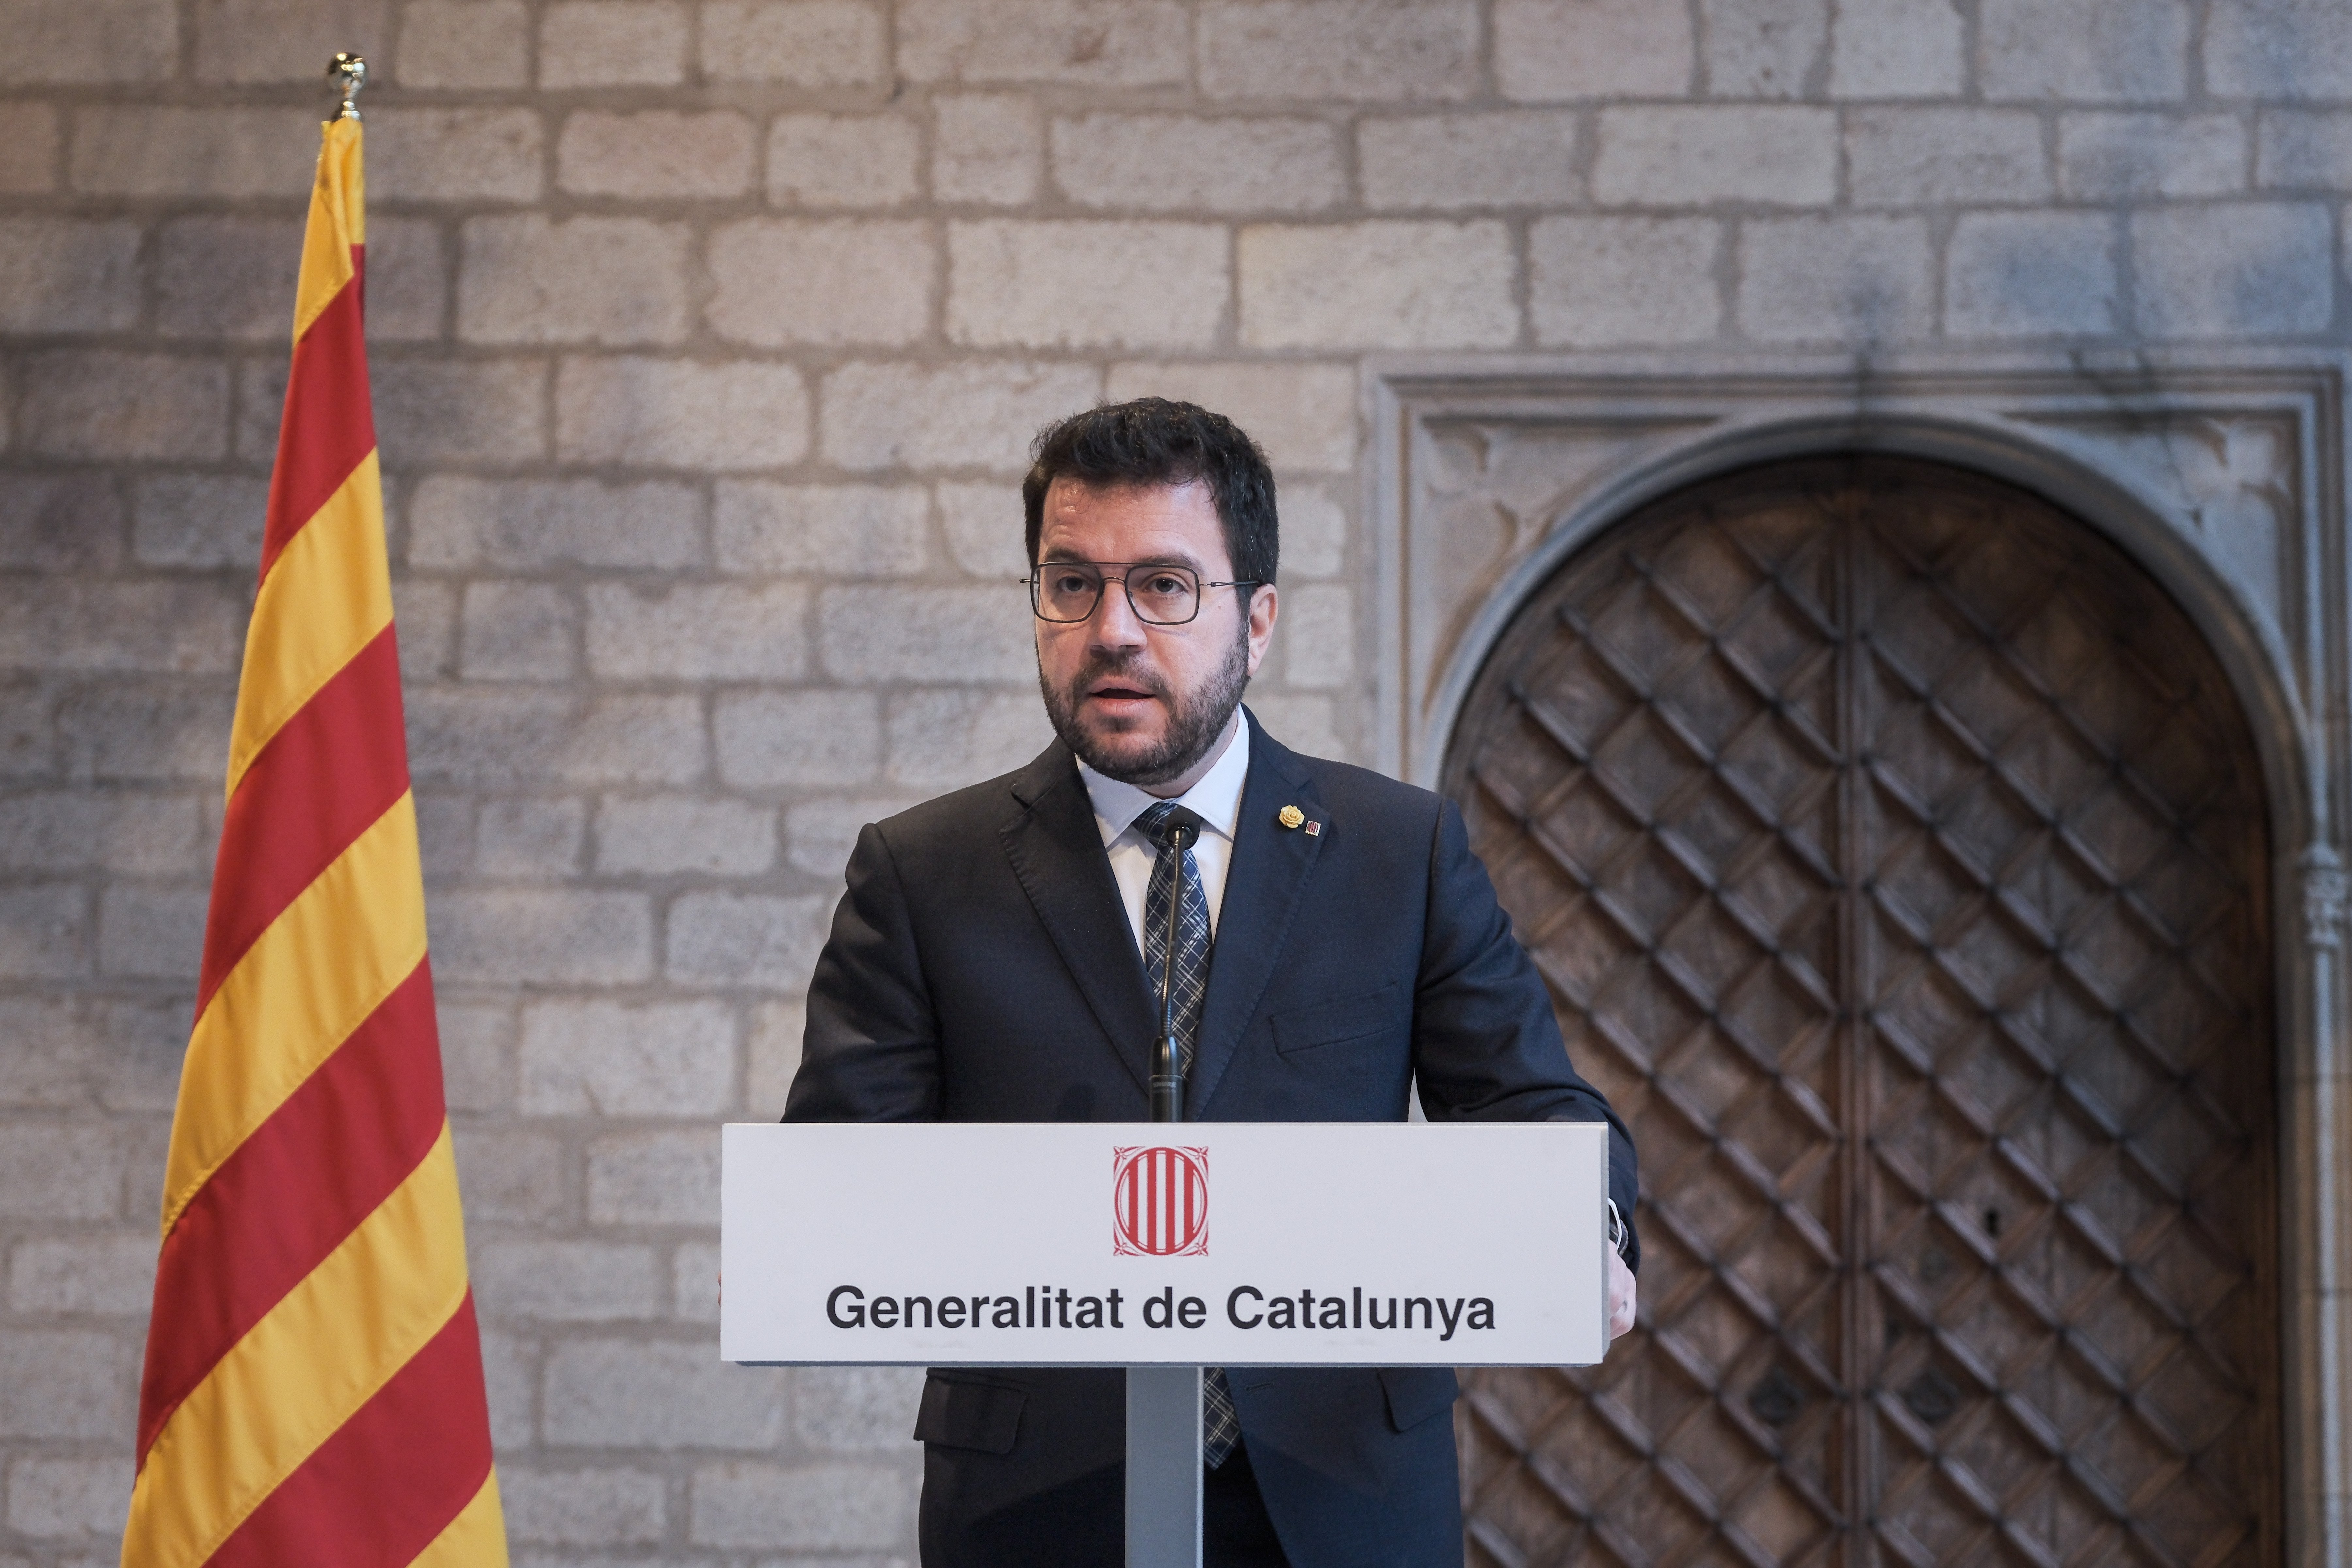 Pere Aragonès sees the legislature reinforced after Catalan budget approval